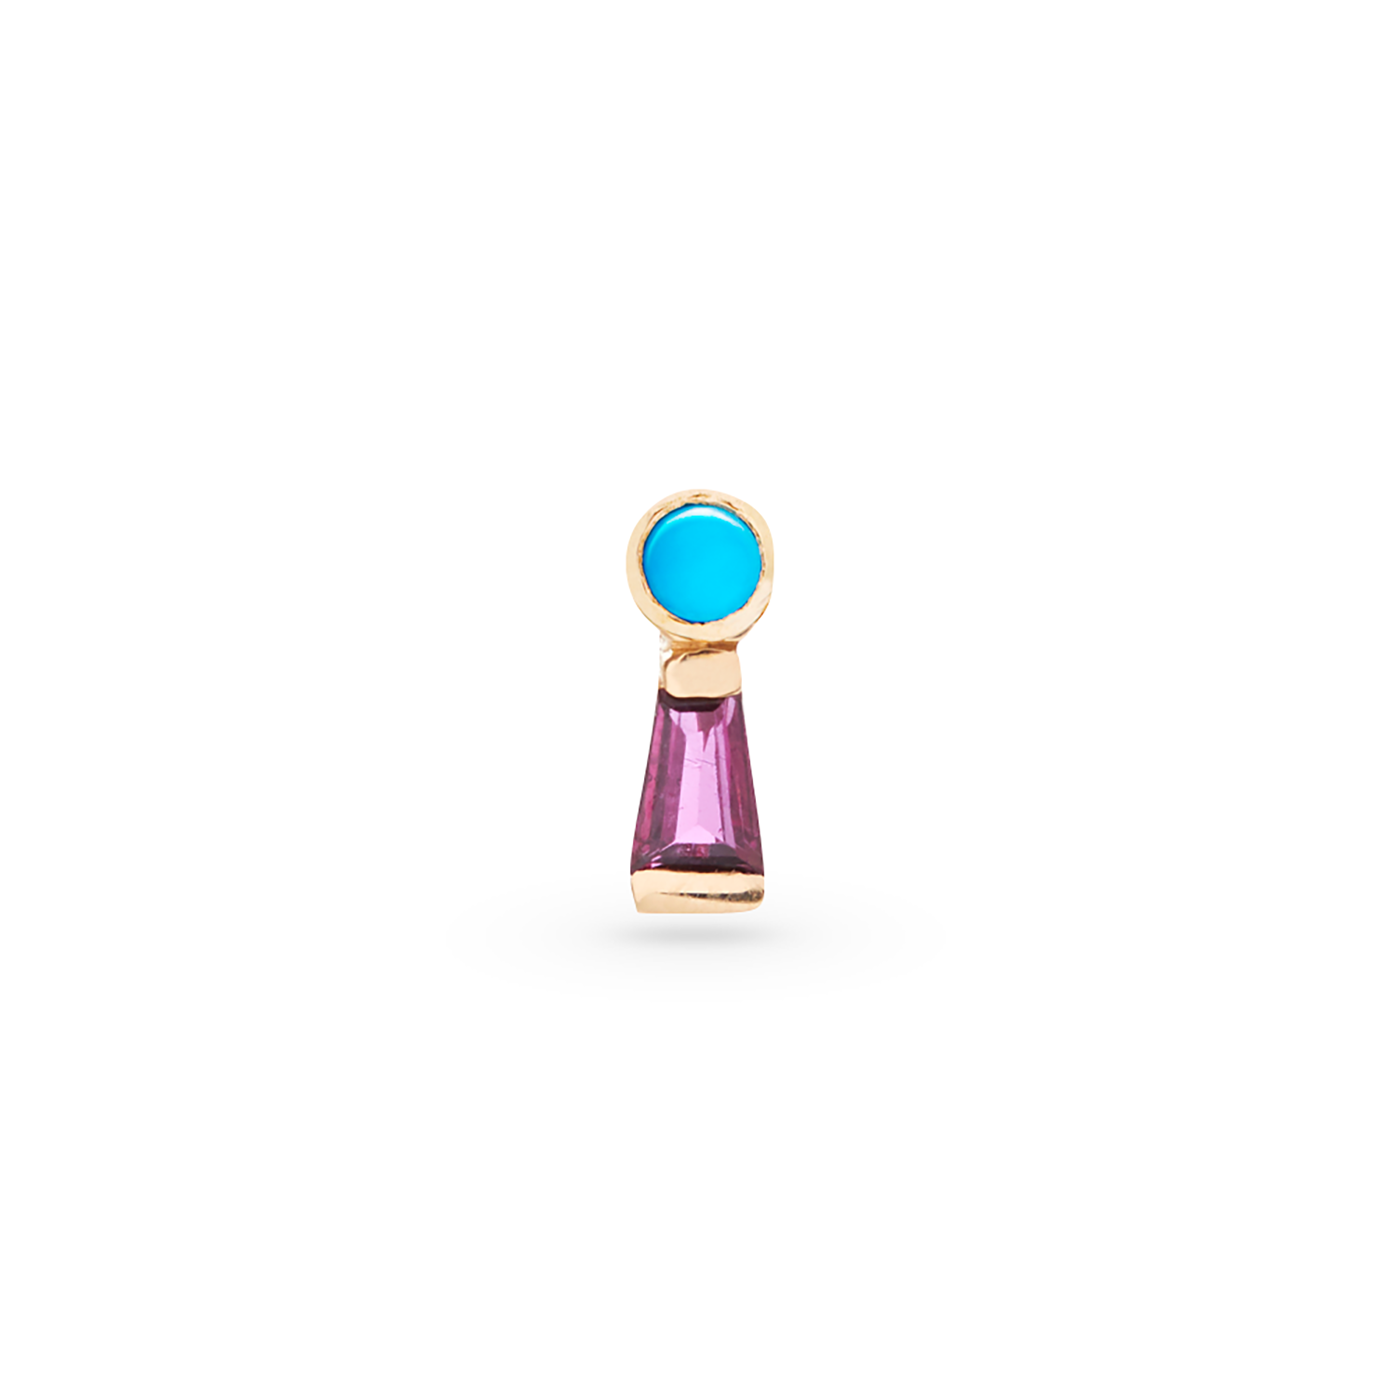 The Garnet Keyhole with Turquoise Single Stud Earring